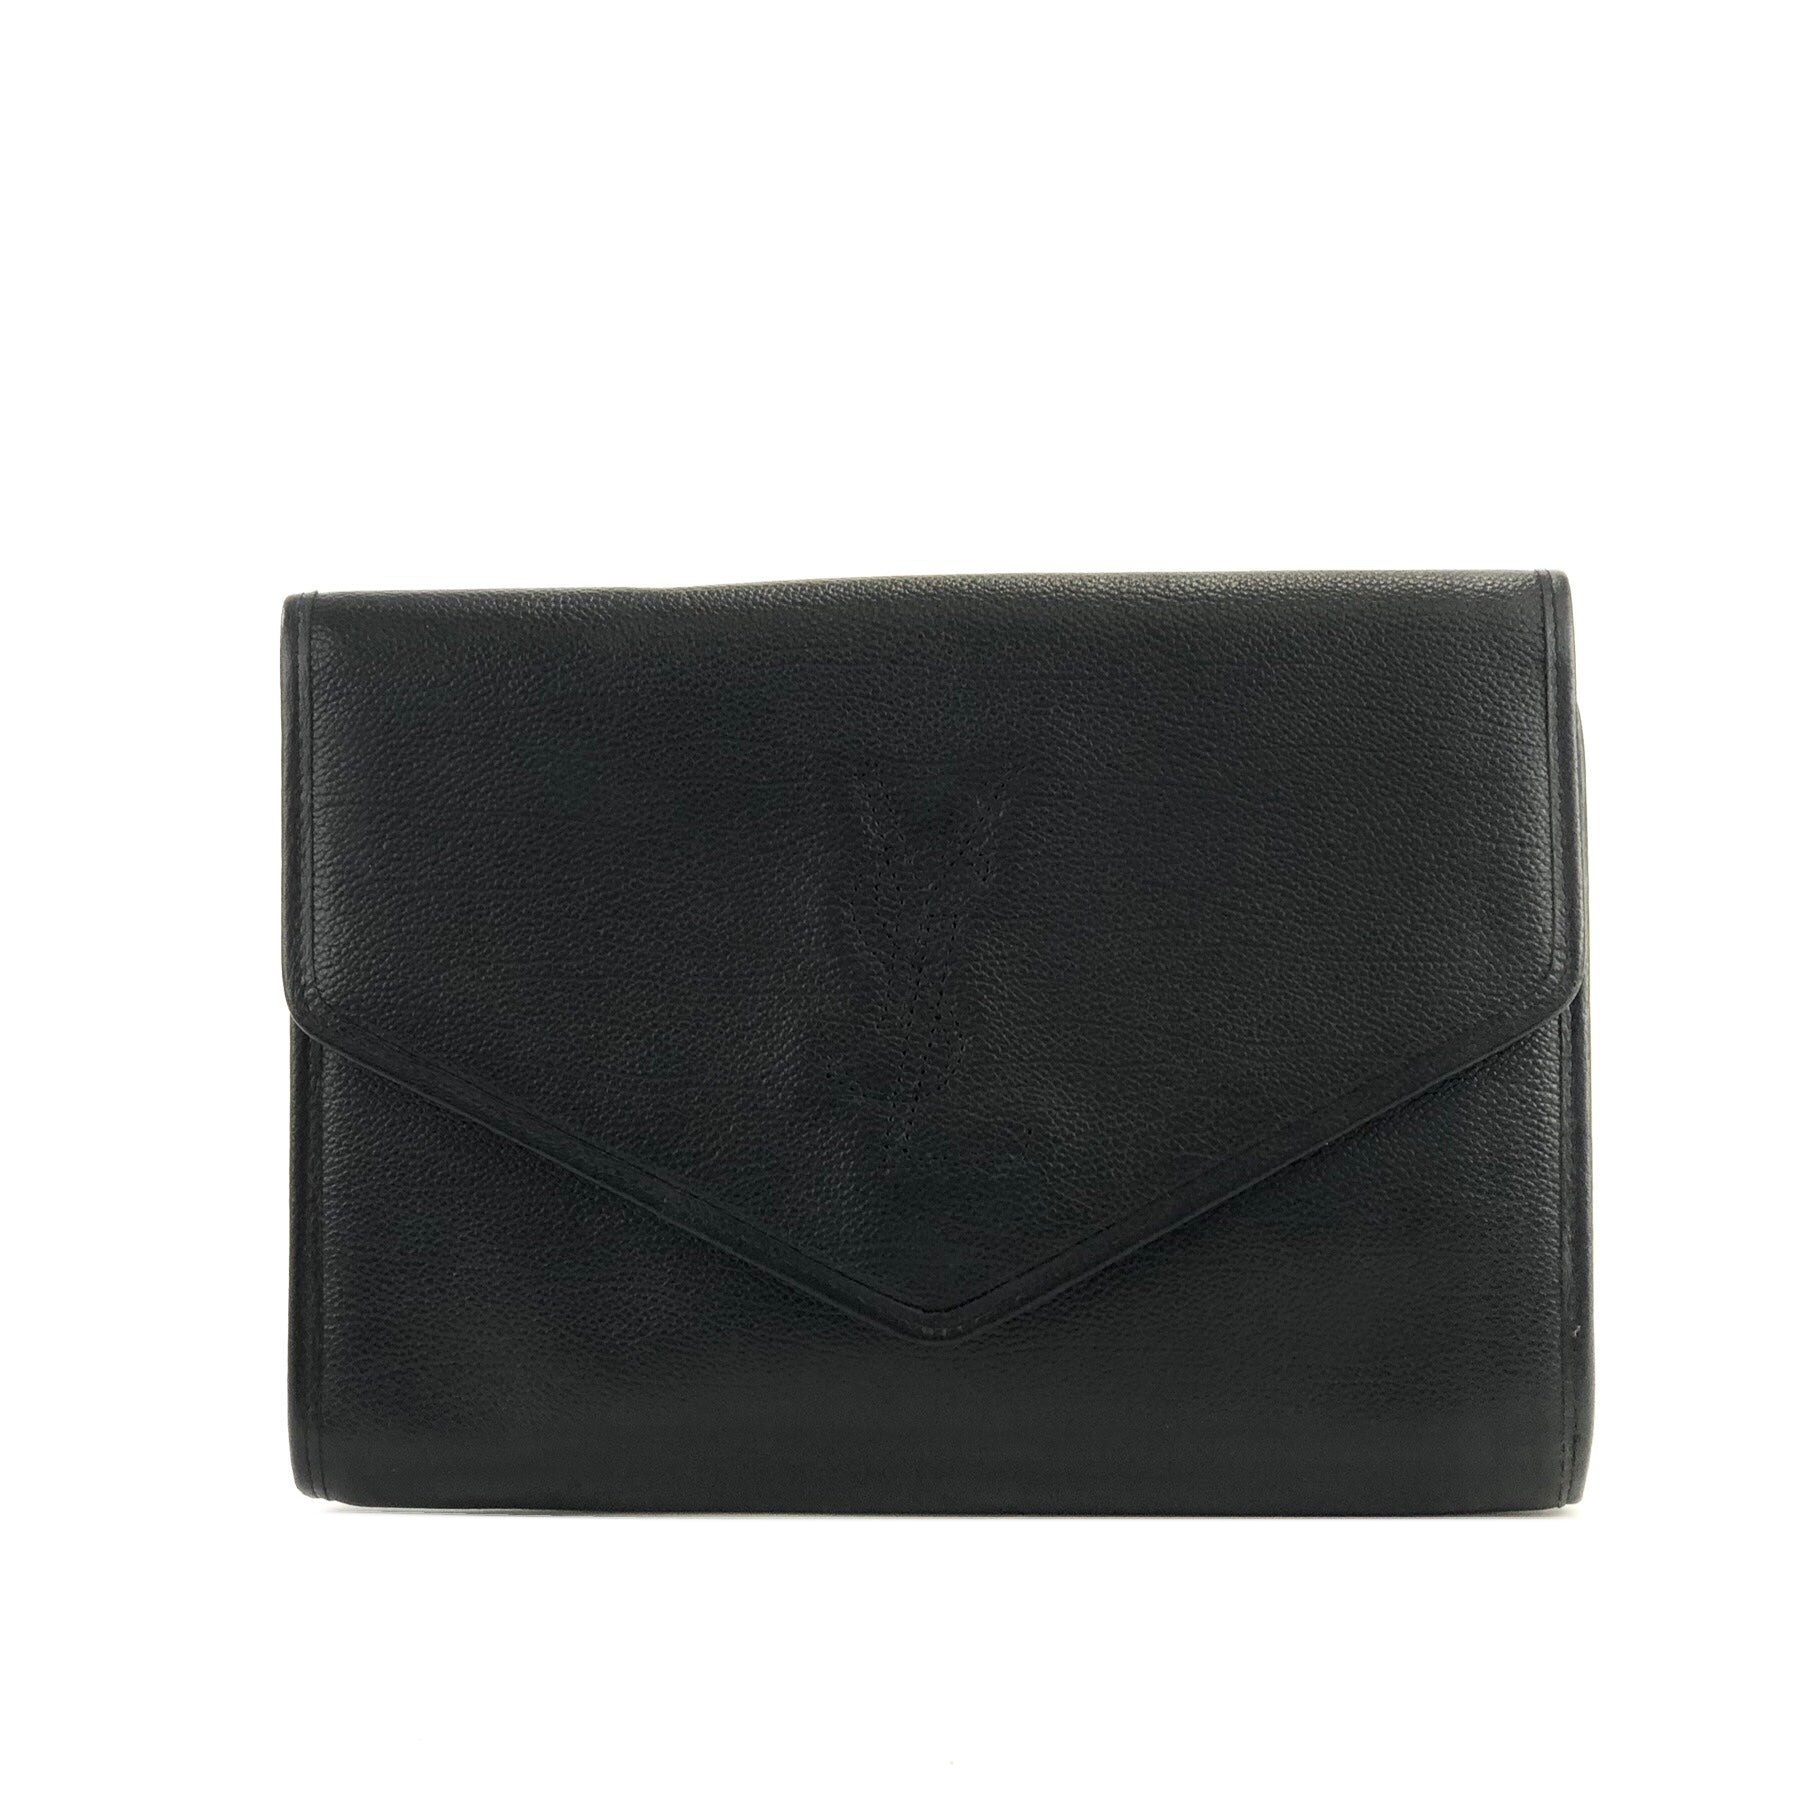 YSL Yves Saint Laurent Clutch Bag Second Bag Black 11x8x1in